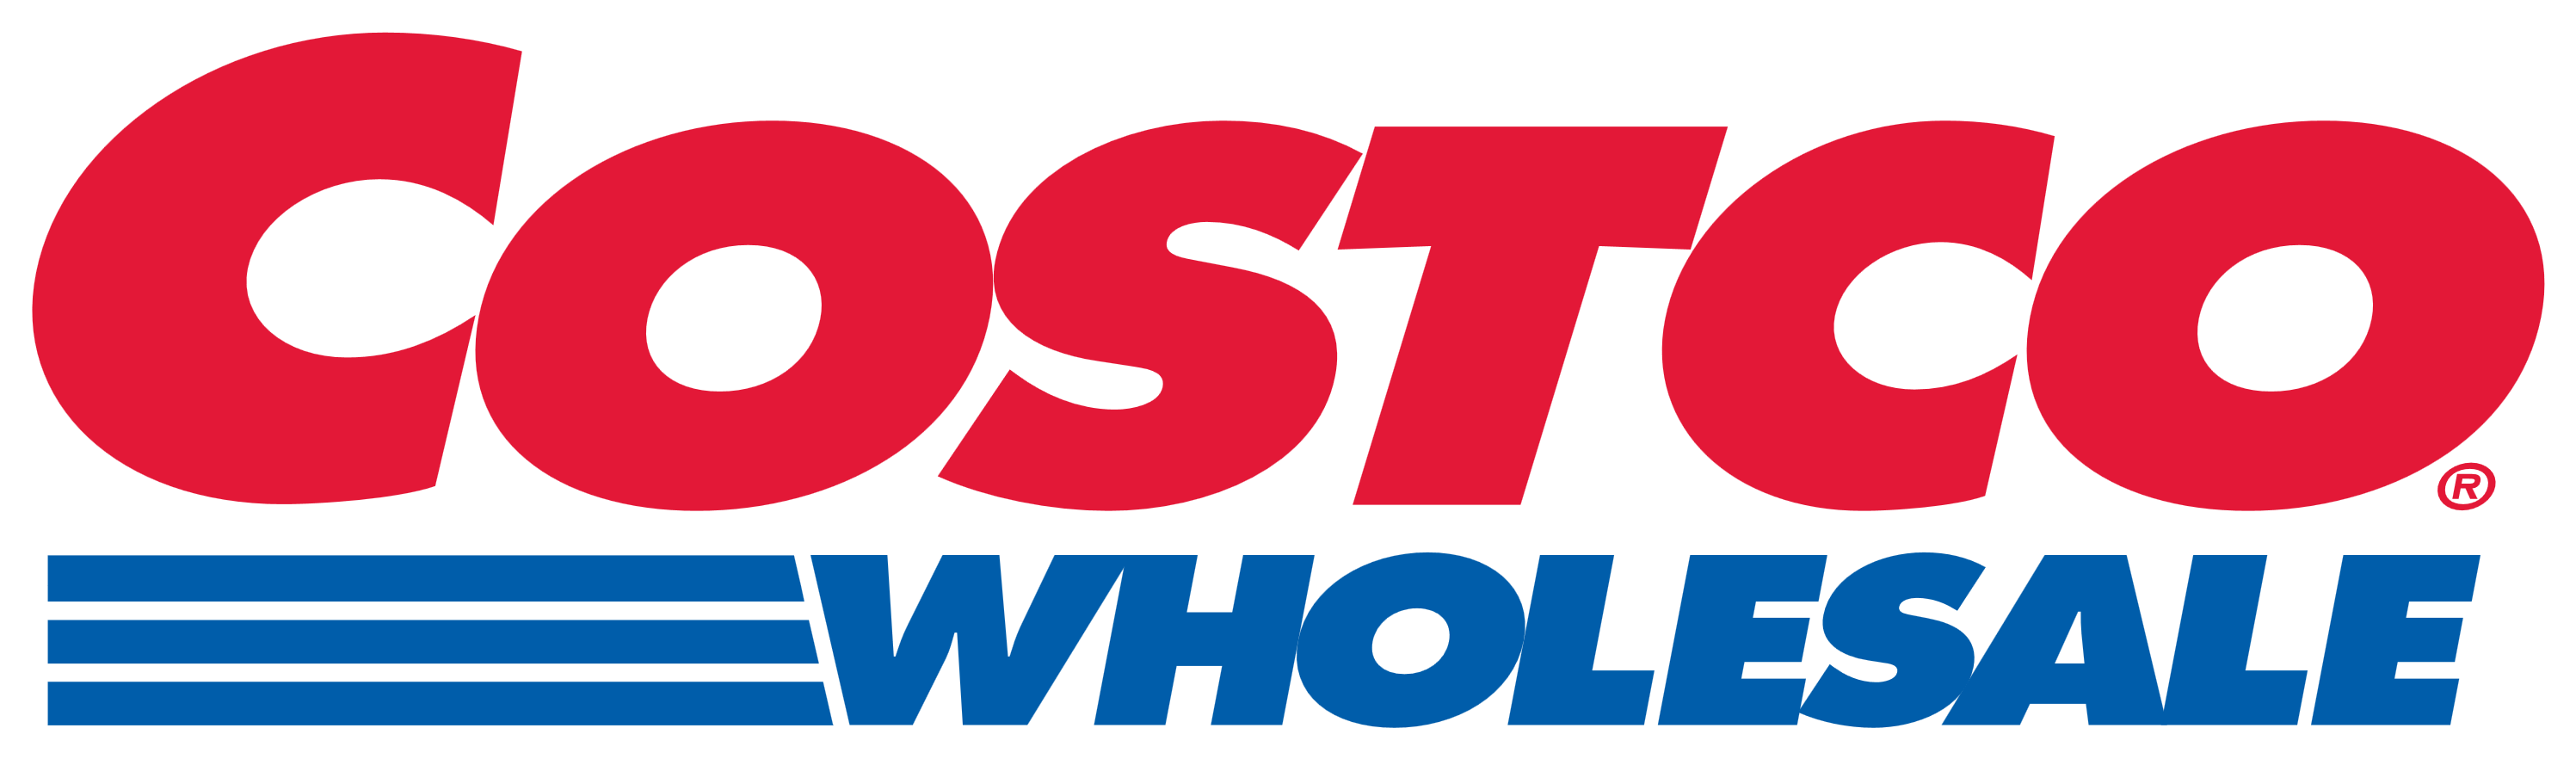 Costco logo image